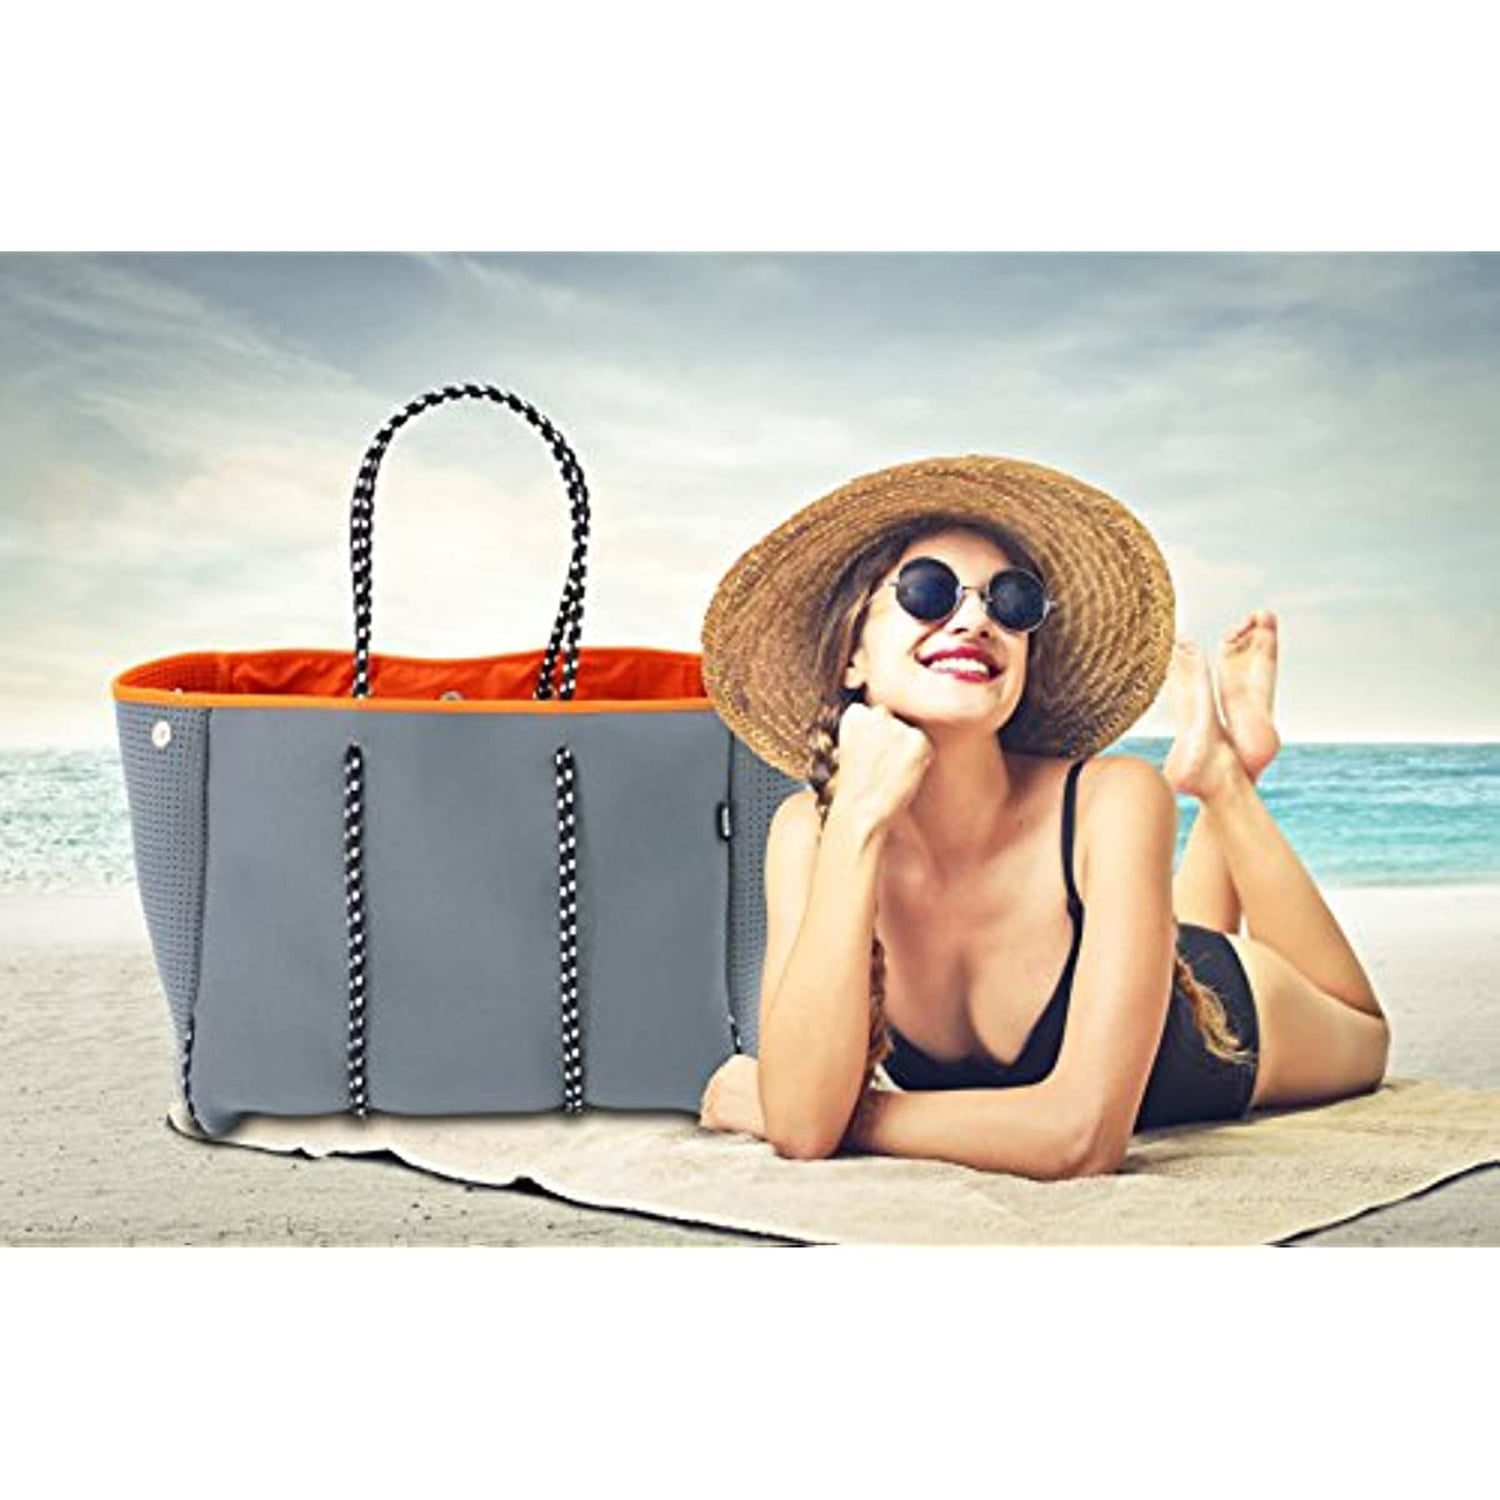 Travel Bag, Swimming Pool Bag, Beach Bag, Women's Fitness Bag(Gray) 